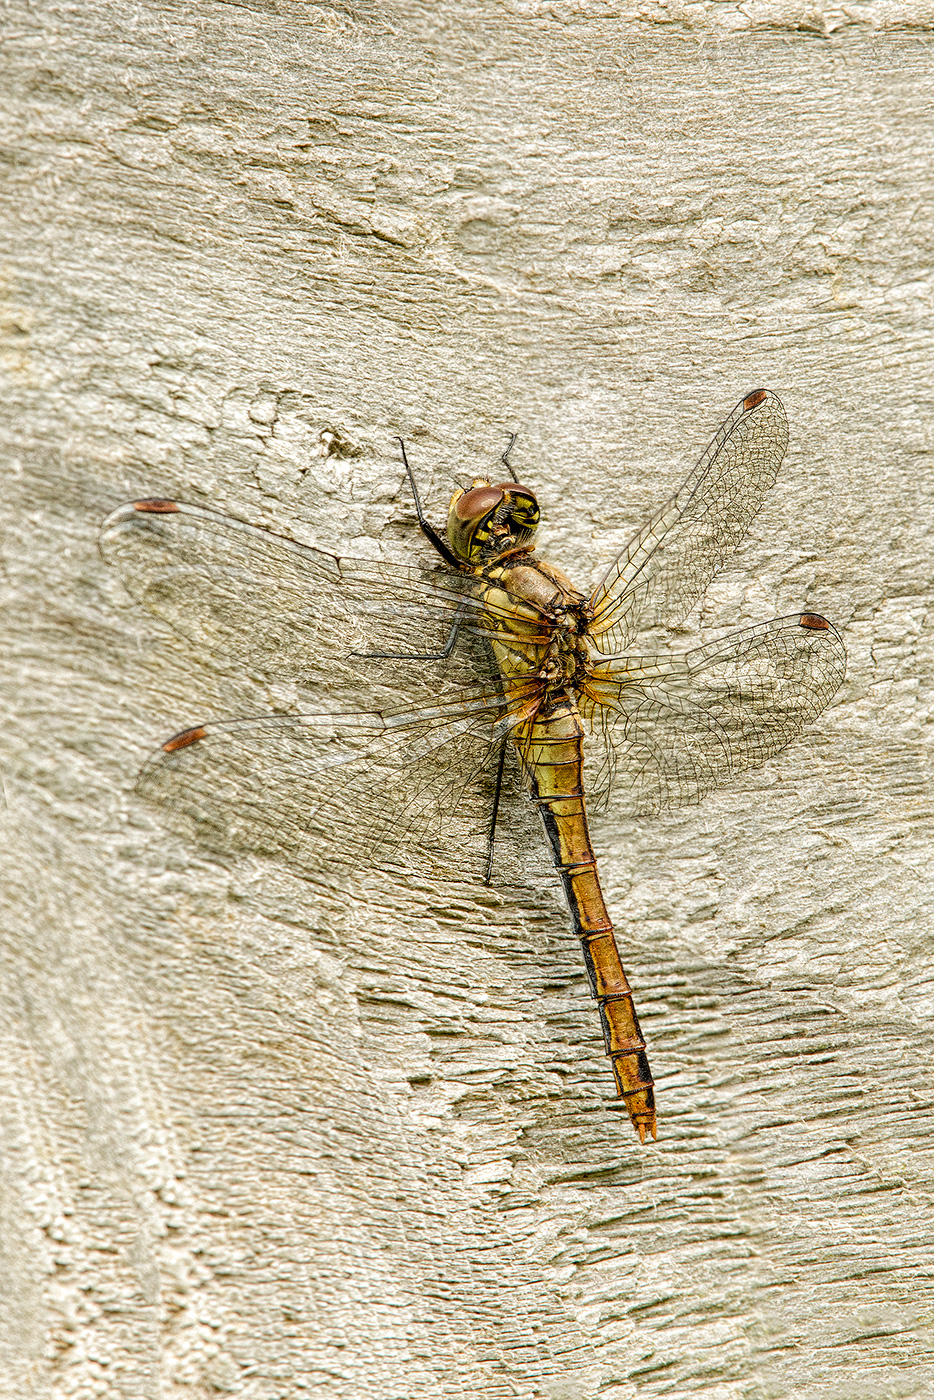 darter dragonfly drying